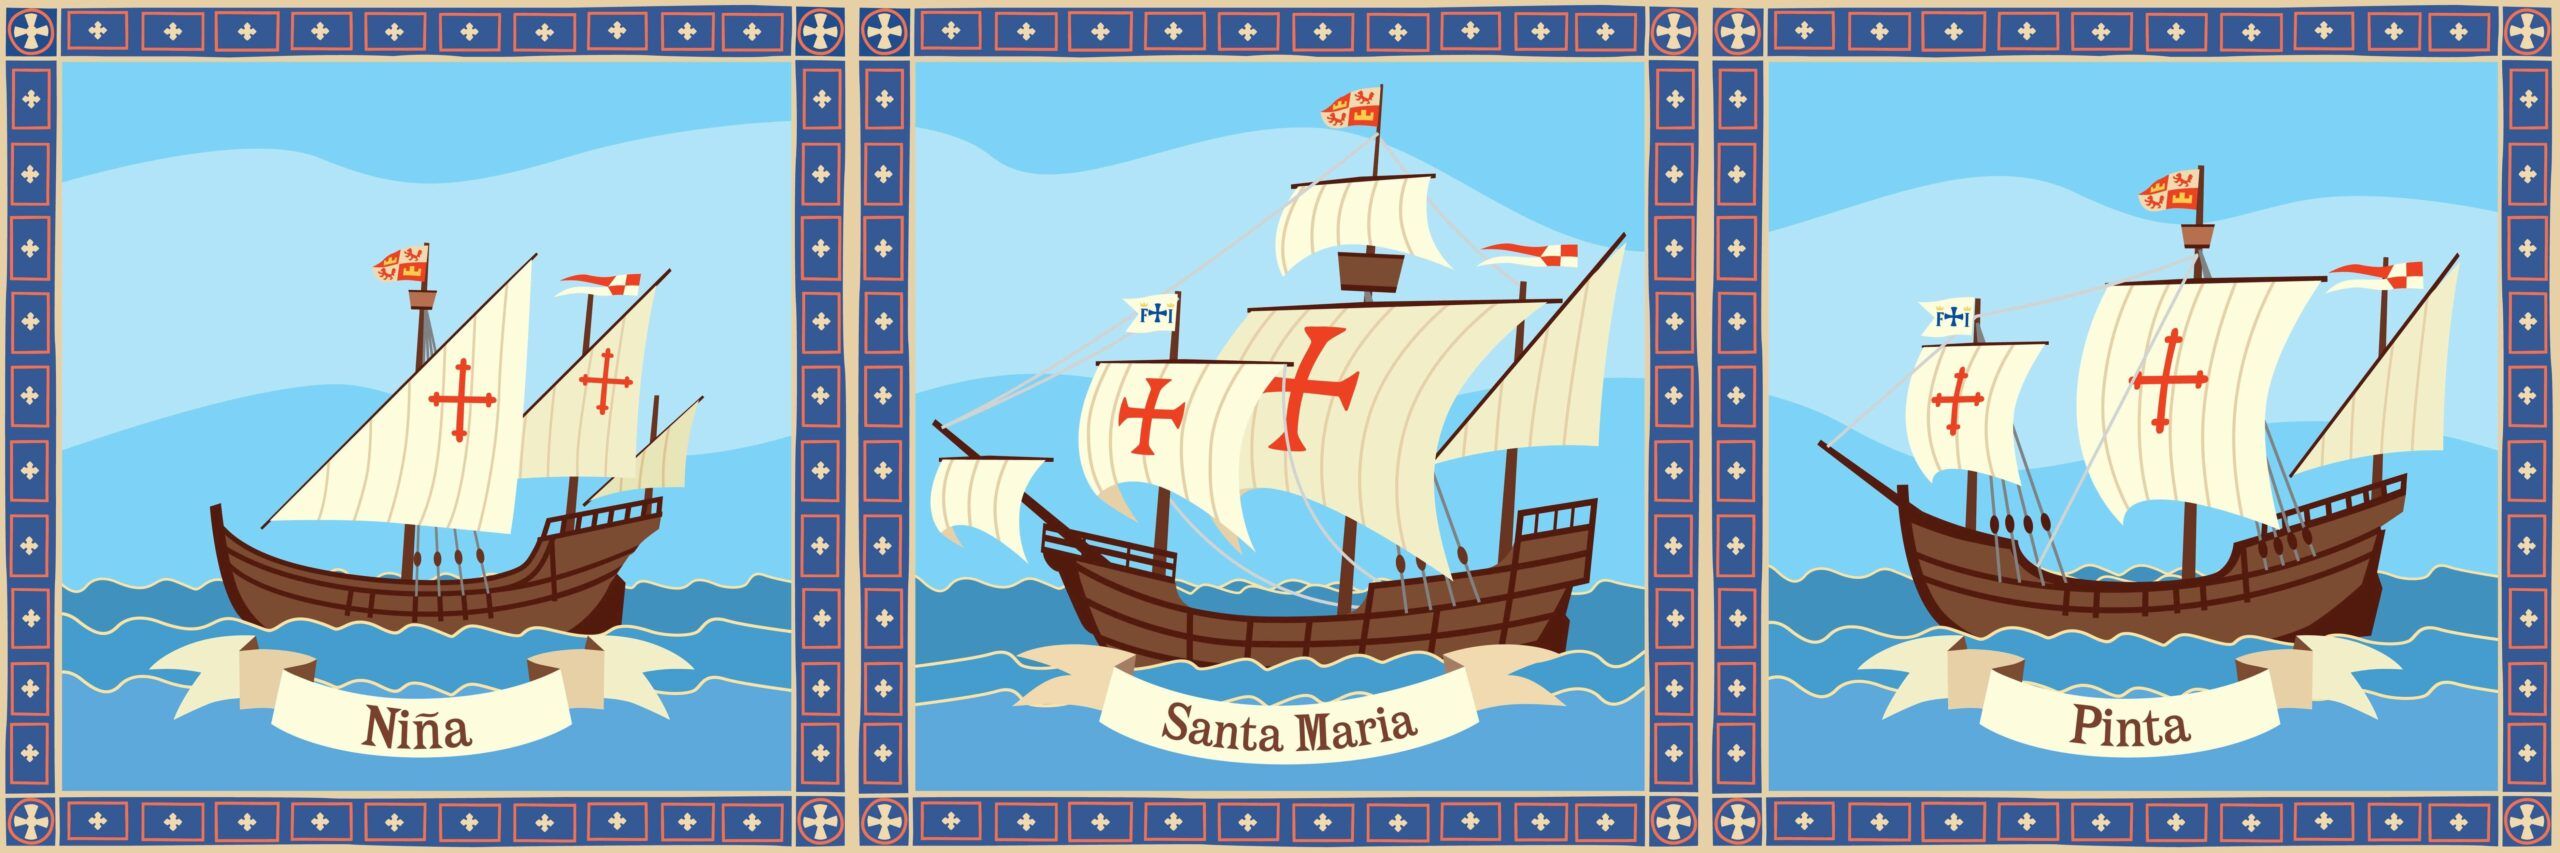 Niña, Santa Maria, Pinta - Kolumbovy lodě